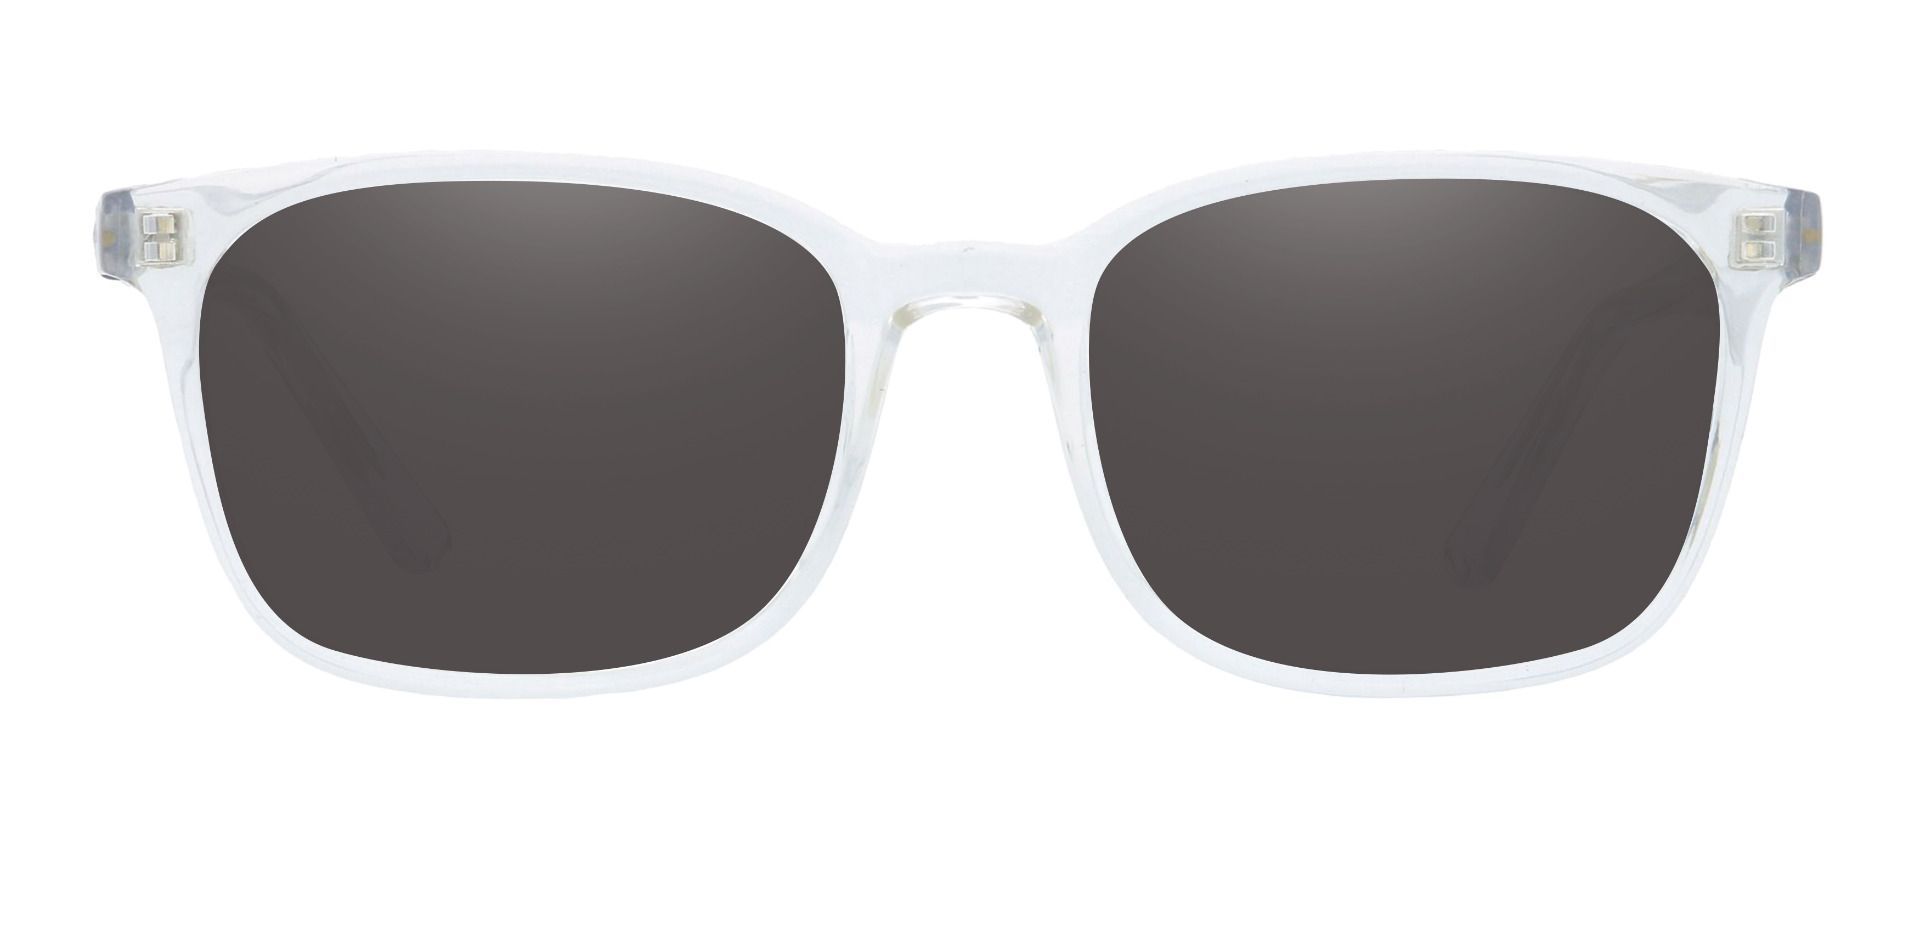 Windsor Rectangle Progressive Sunglasses - Clear Frame With Gray Lenses